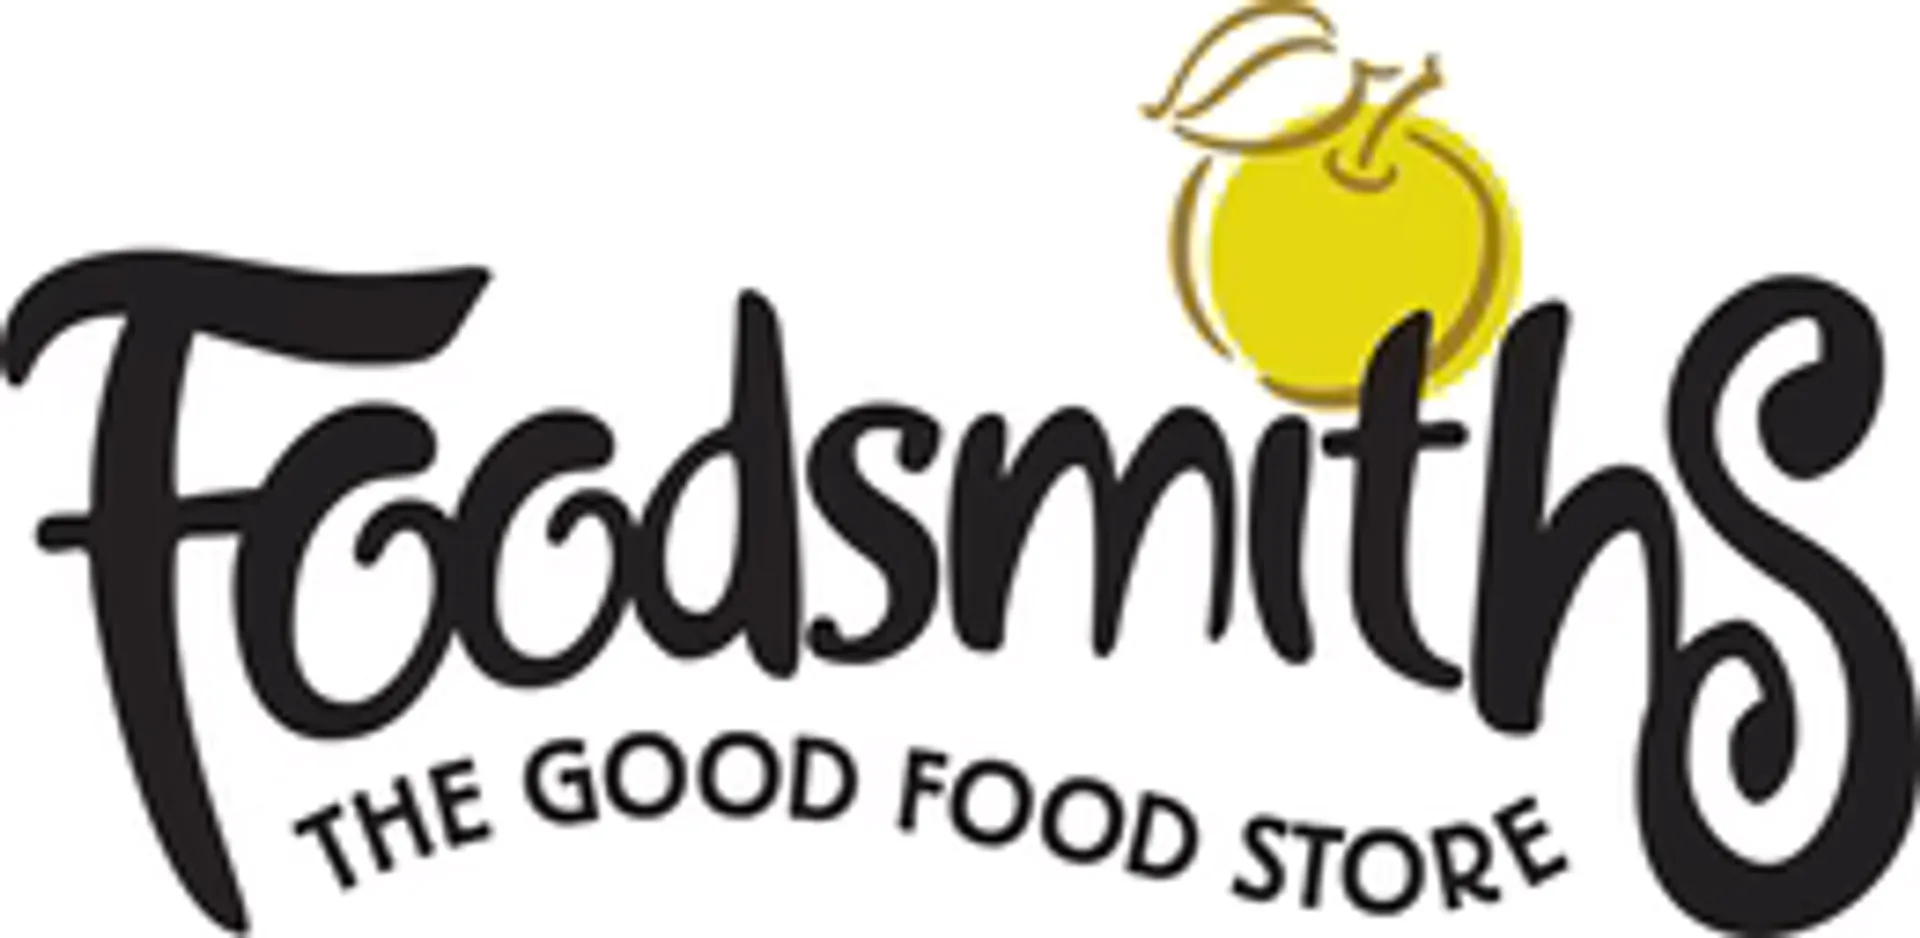 FOODSMITHS logo